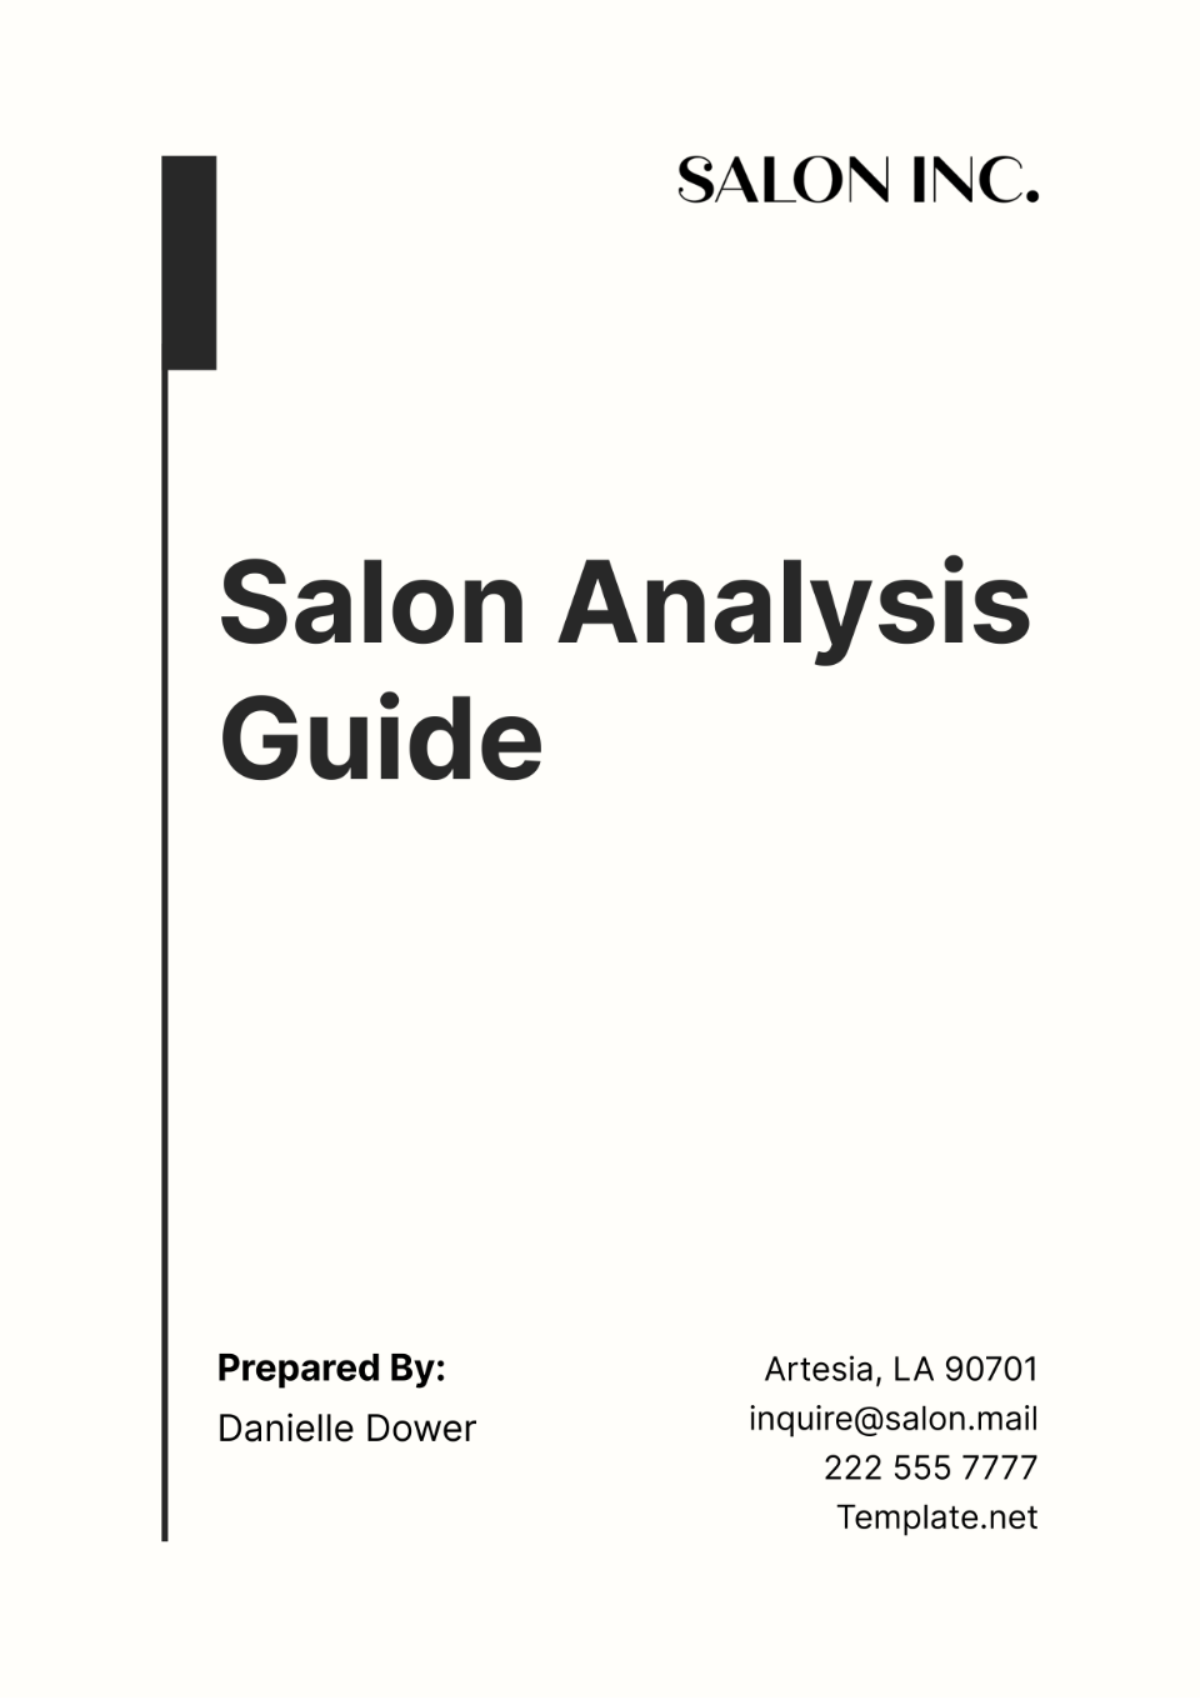 Salon Analysis Guide Template